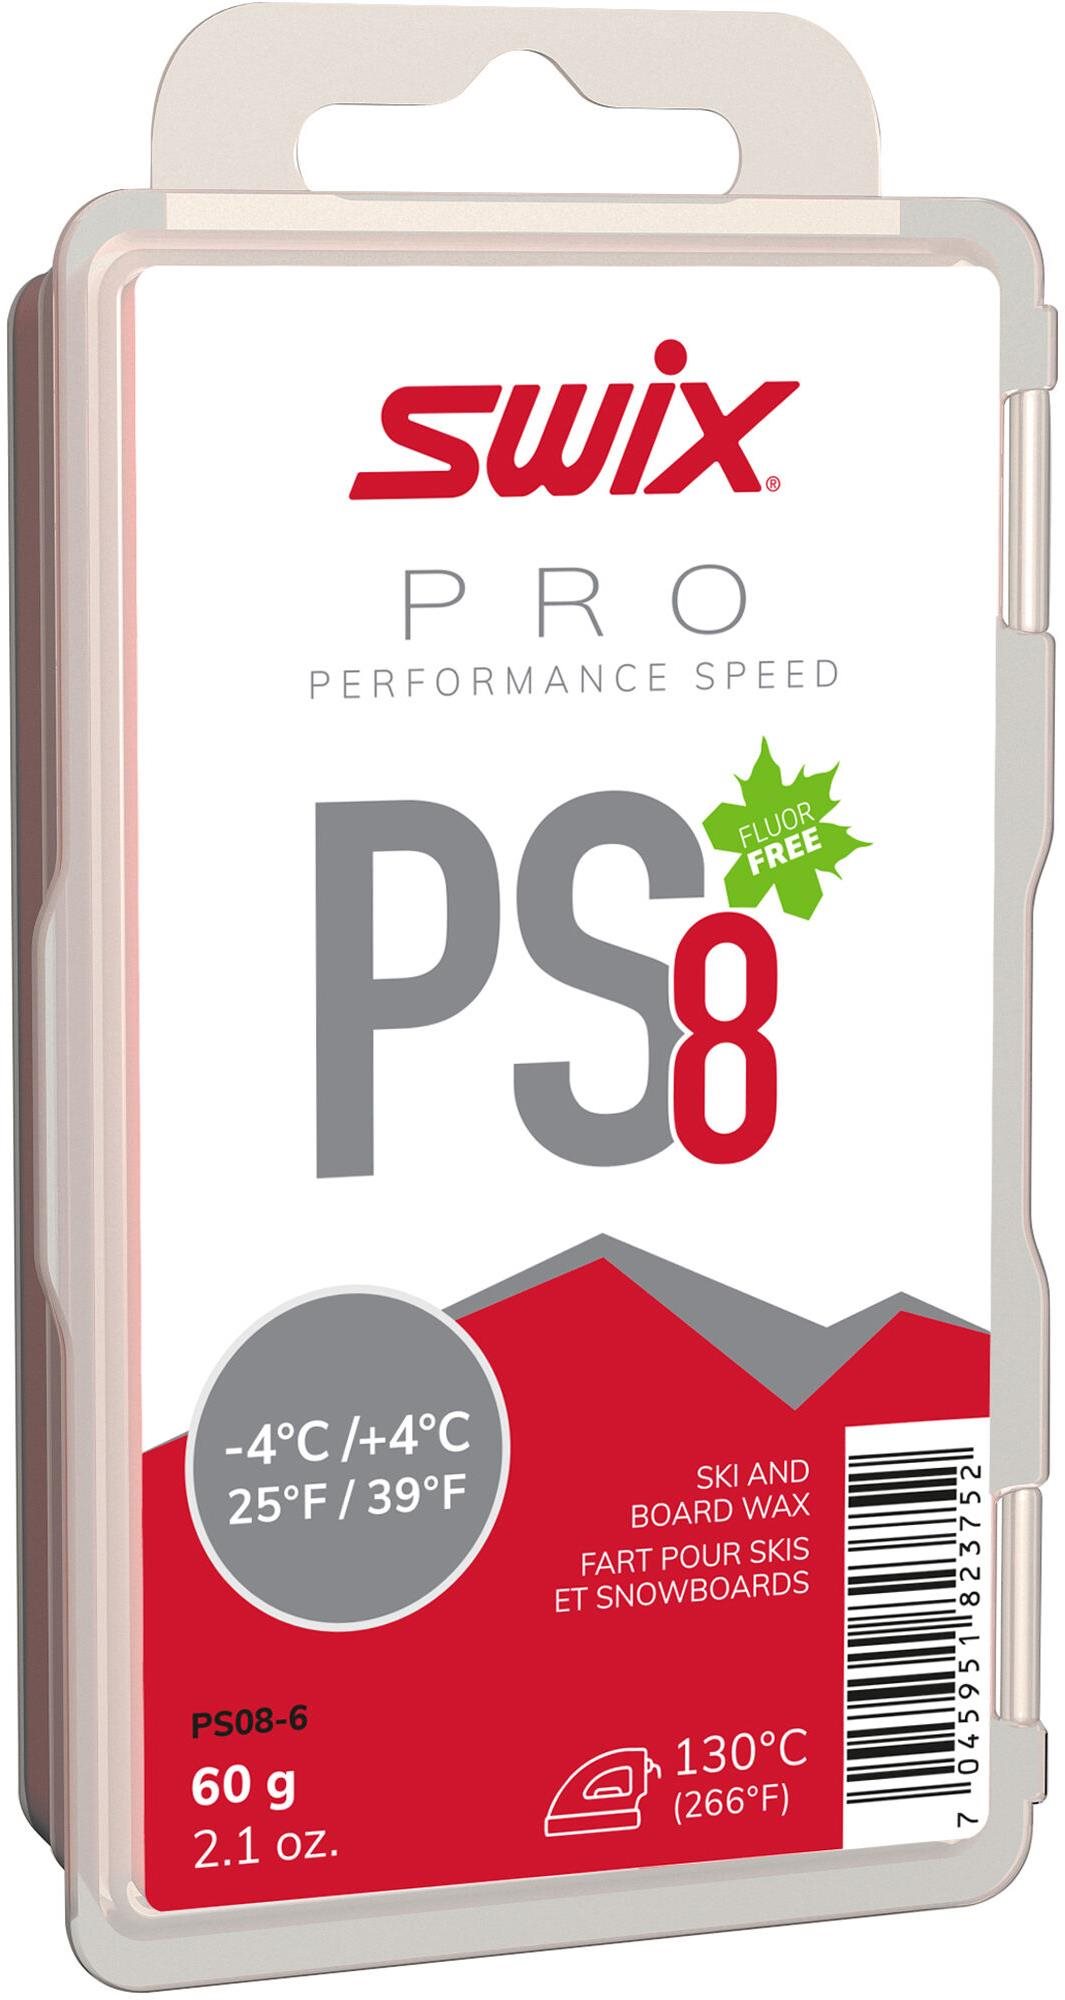 Swix PS08-6 Pure Speed 60 g